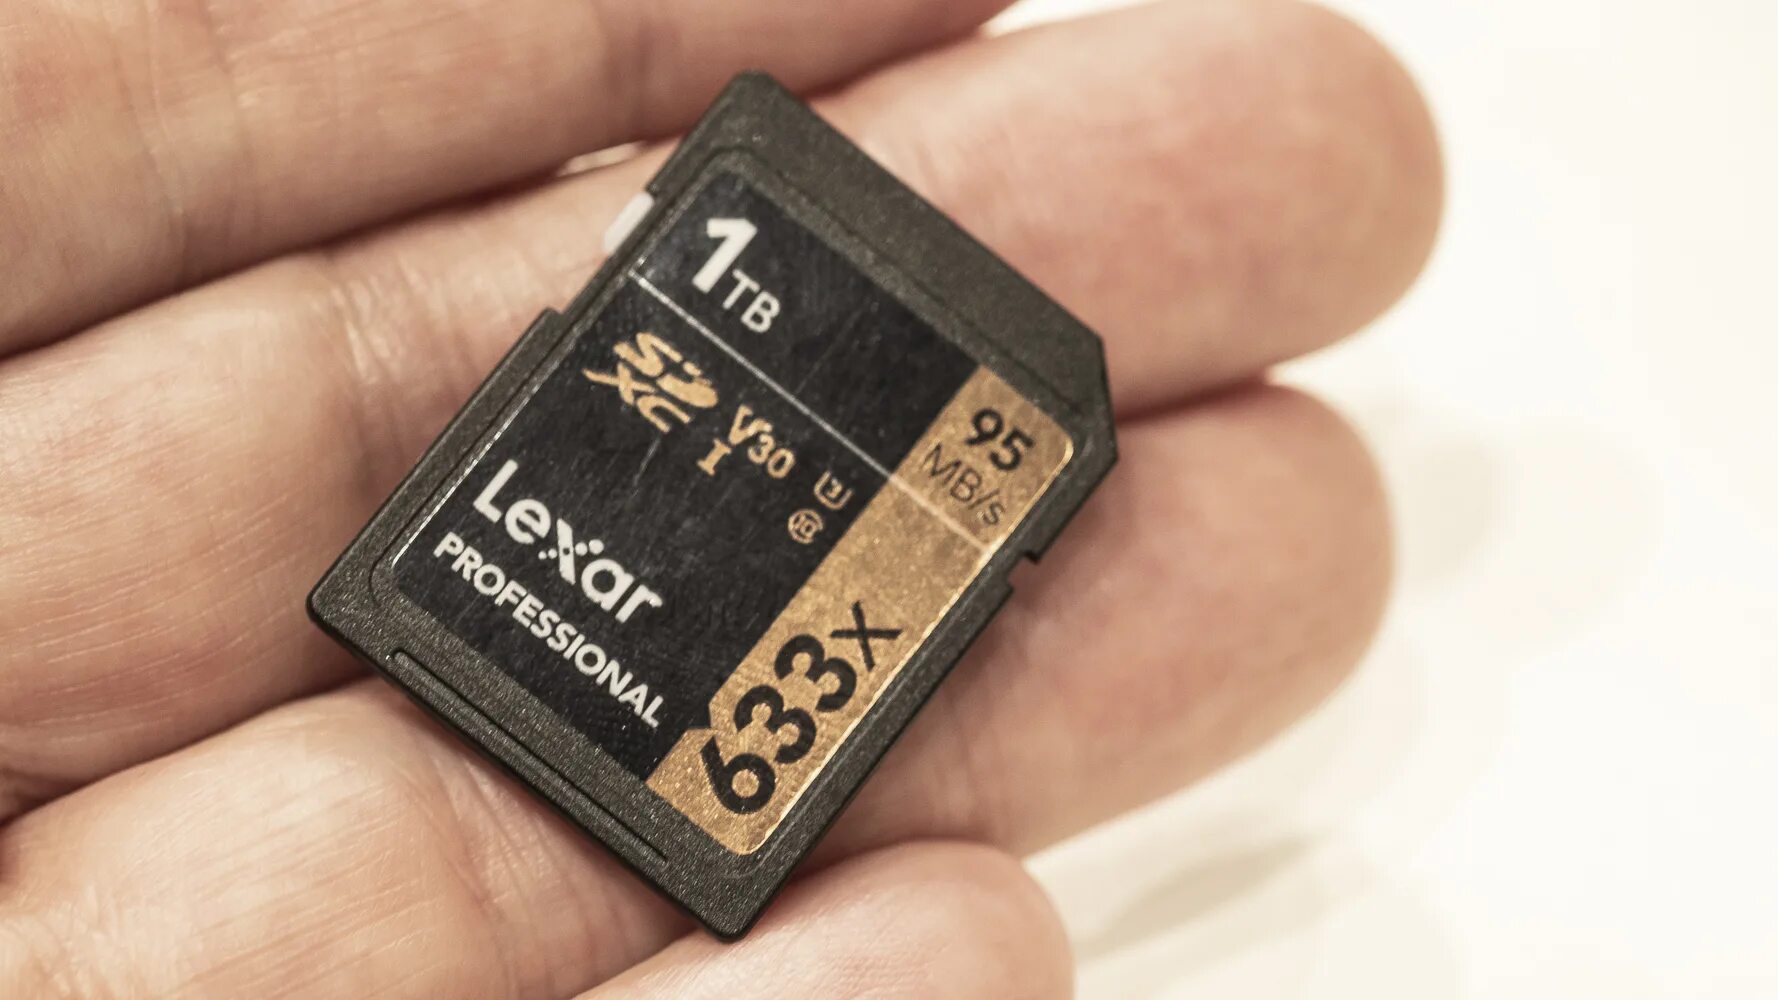 Микро СД 1 терабайт. Карта памяти SD 1 TB. SD карта памяти 1 терабайт. Карточка микро СД 1 терабайт.